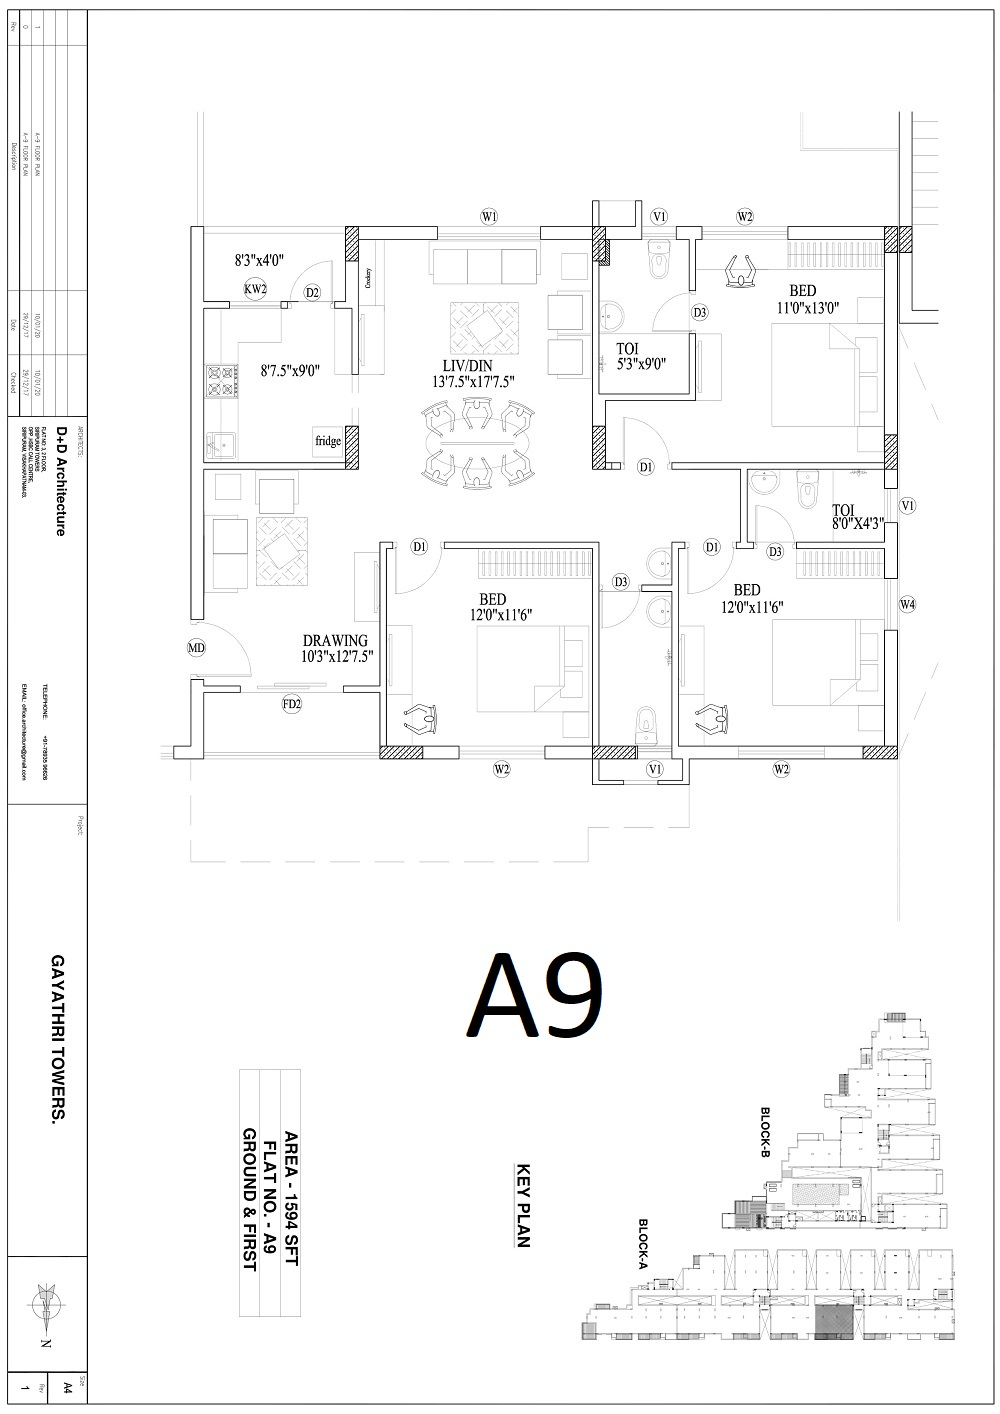 A9 - Floor Plan